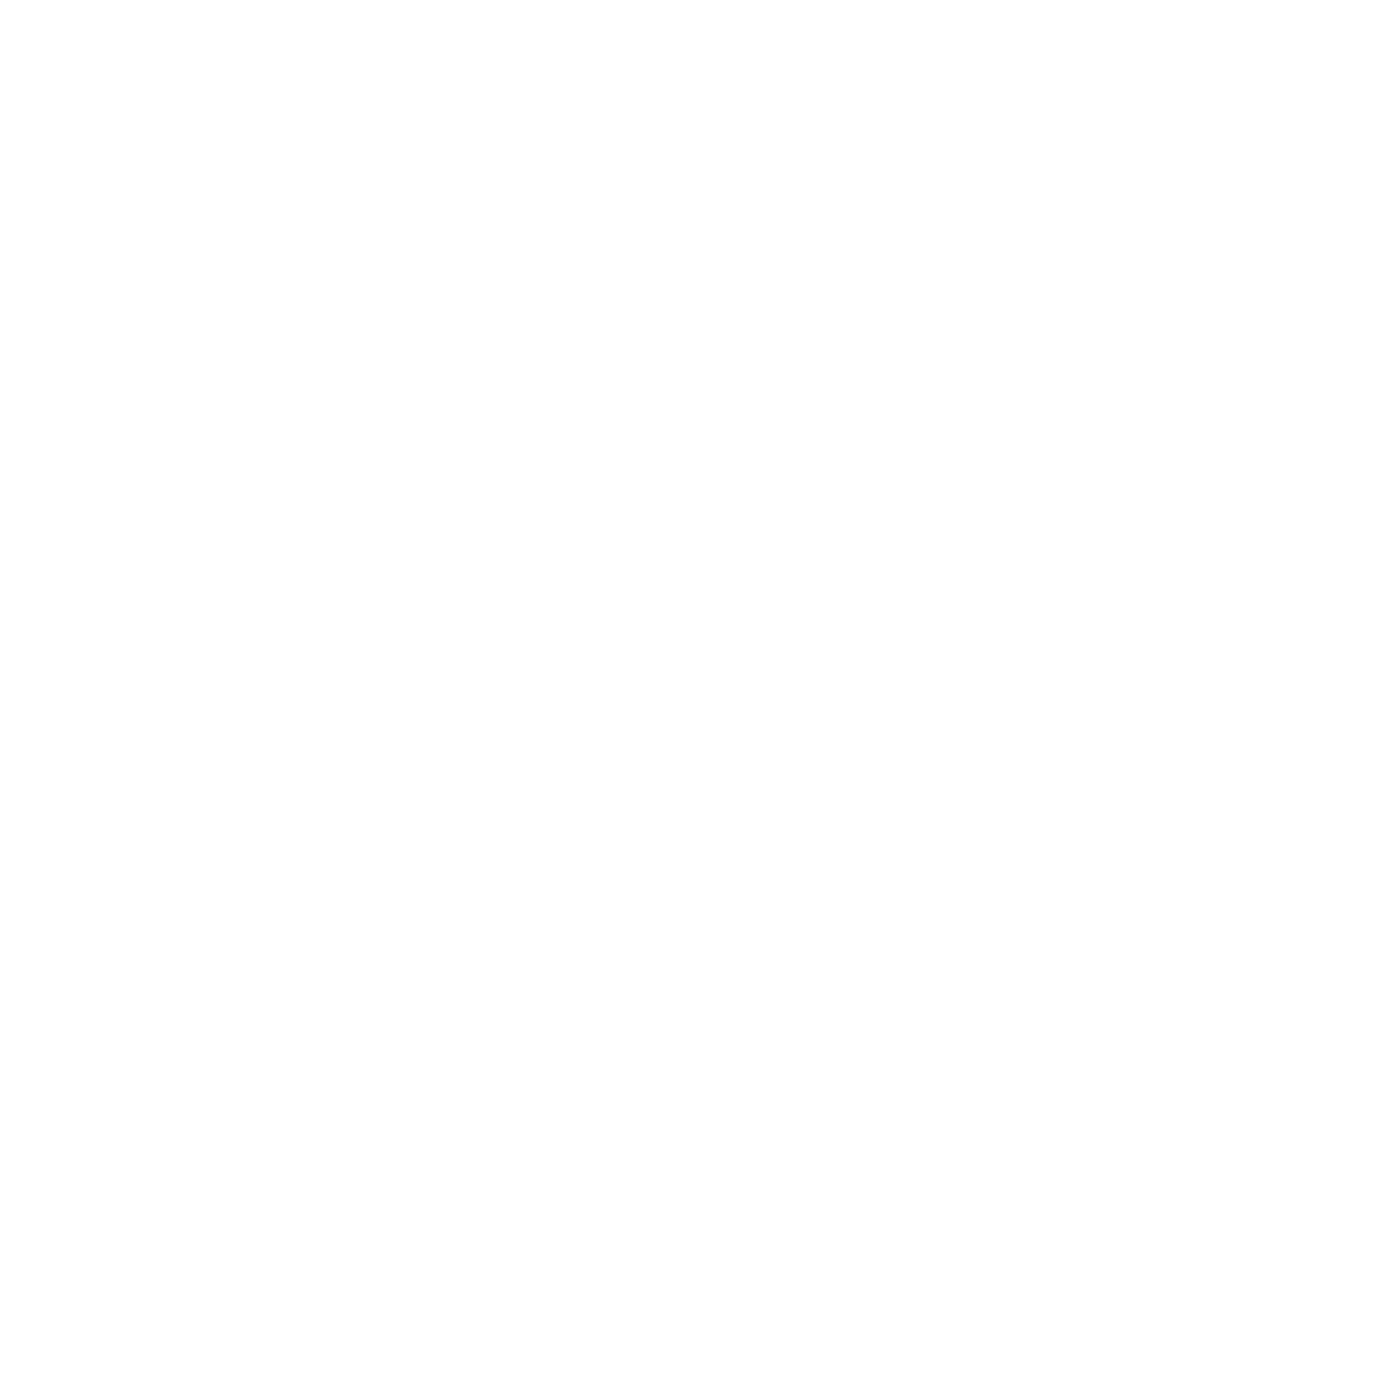 As logistique logo